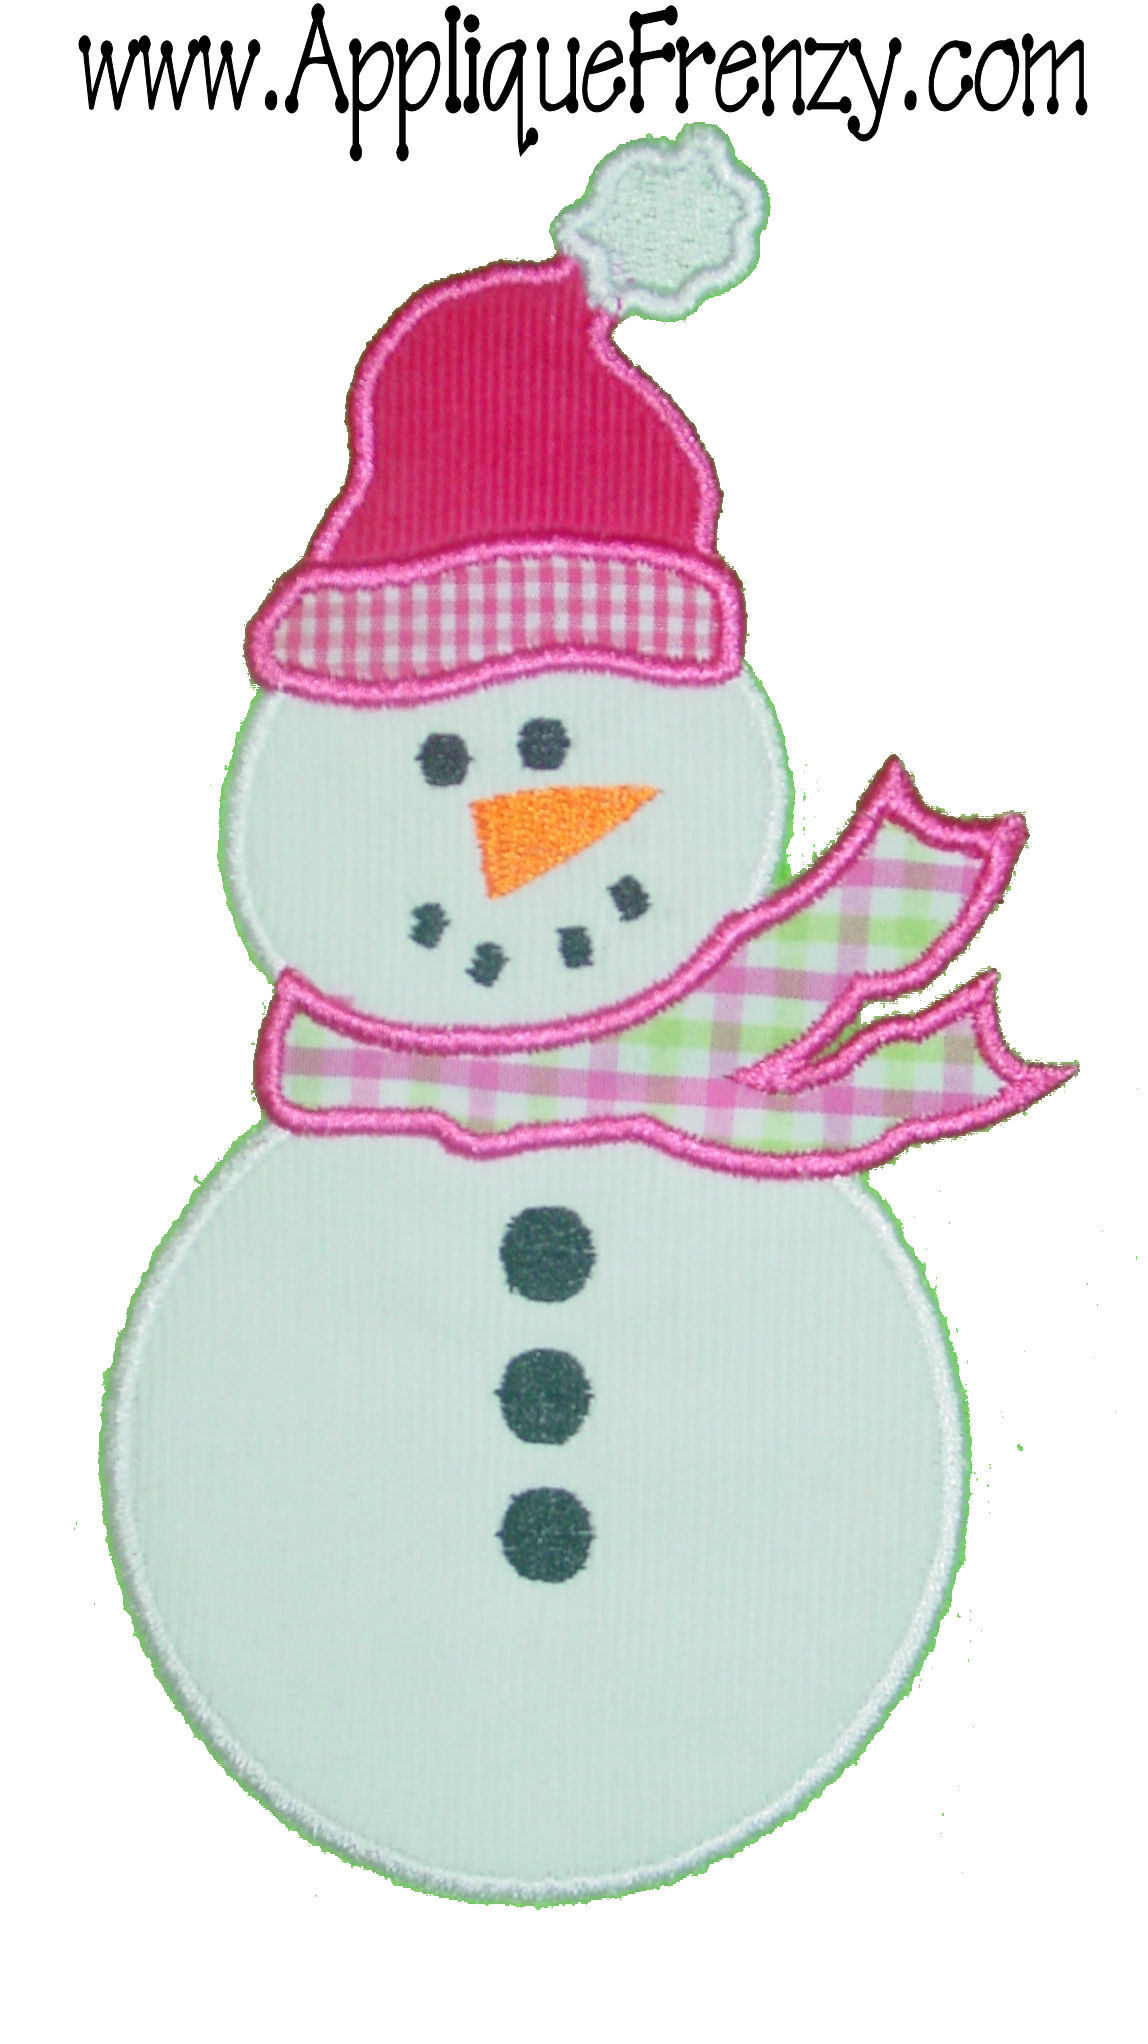 Snowman 2 Applique Design-snowman, chrismtas, frosty, santa,winter, snow